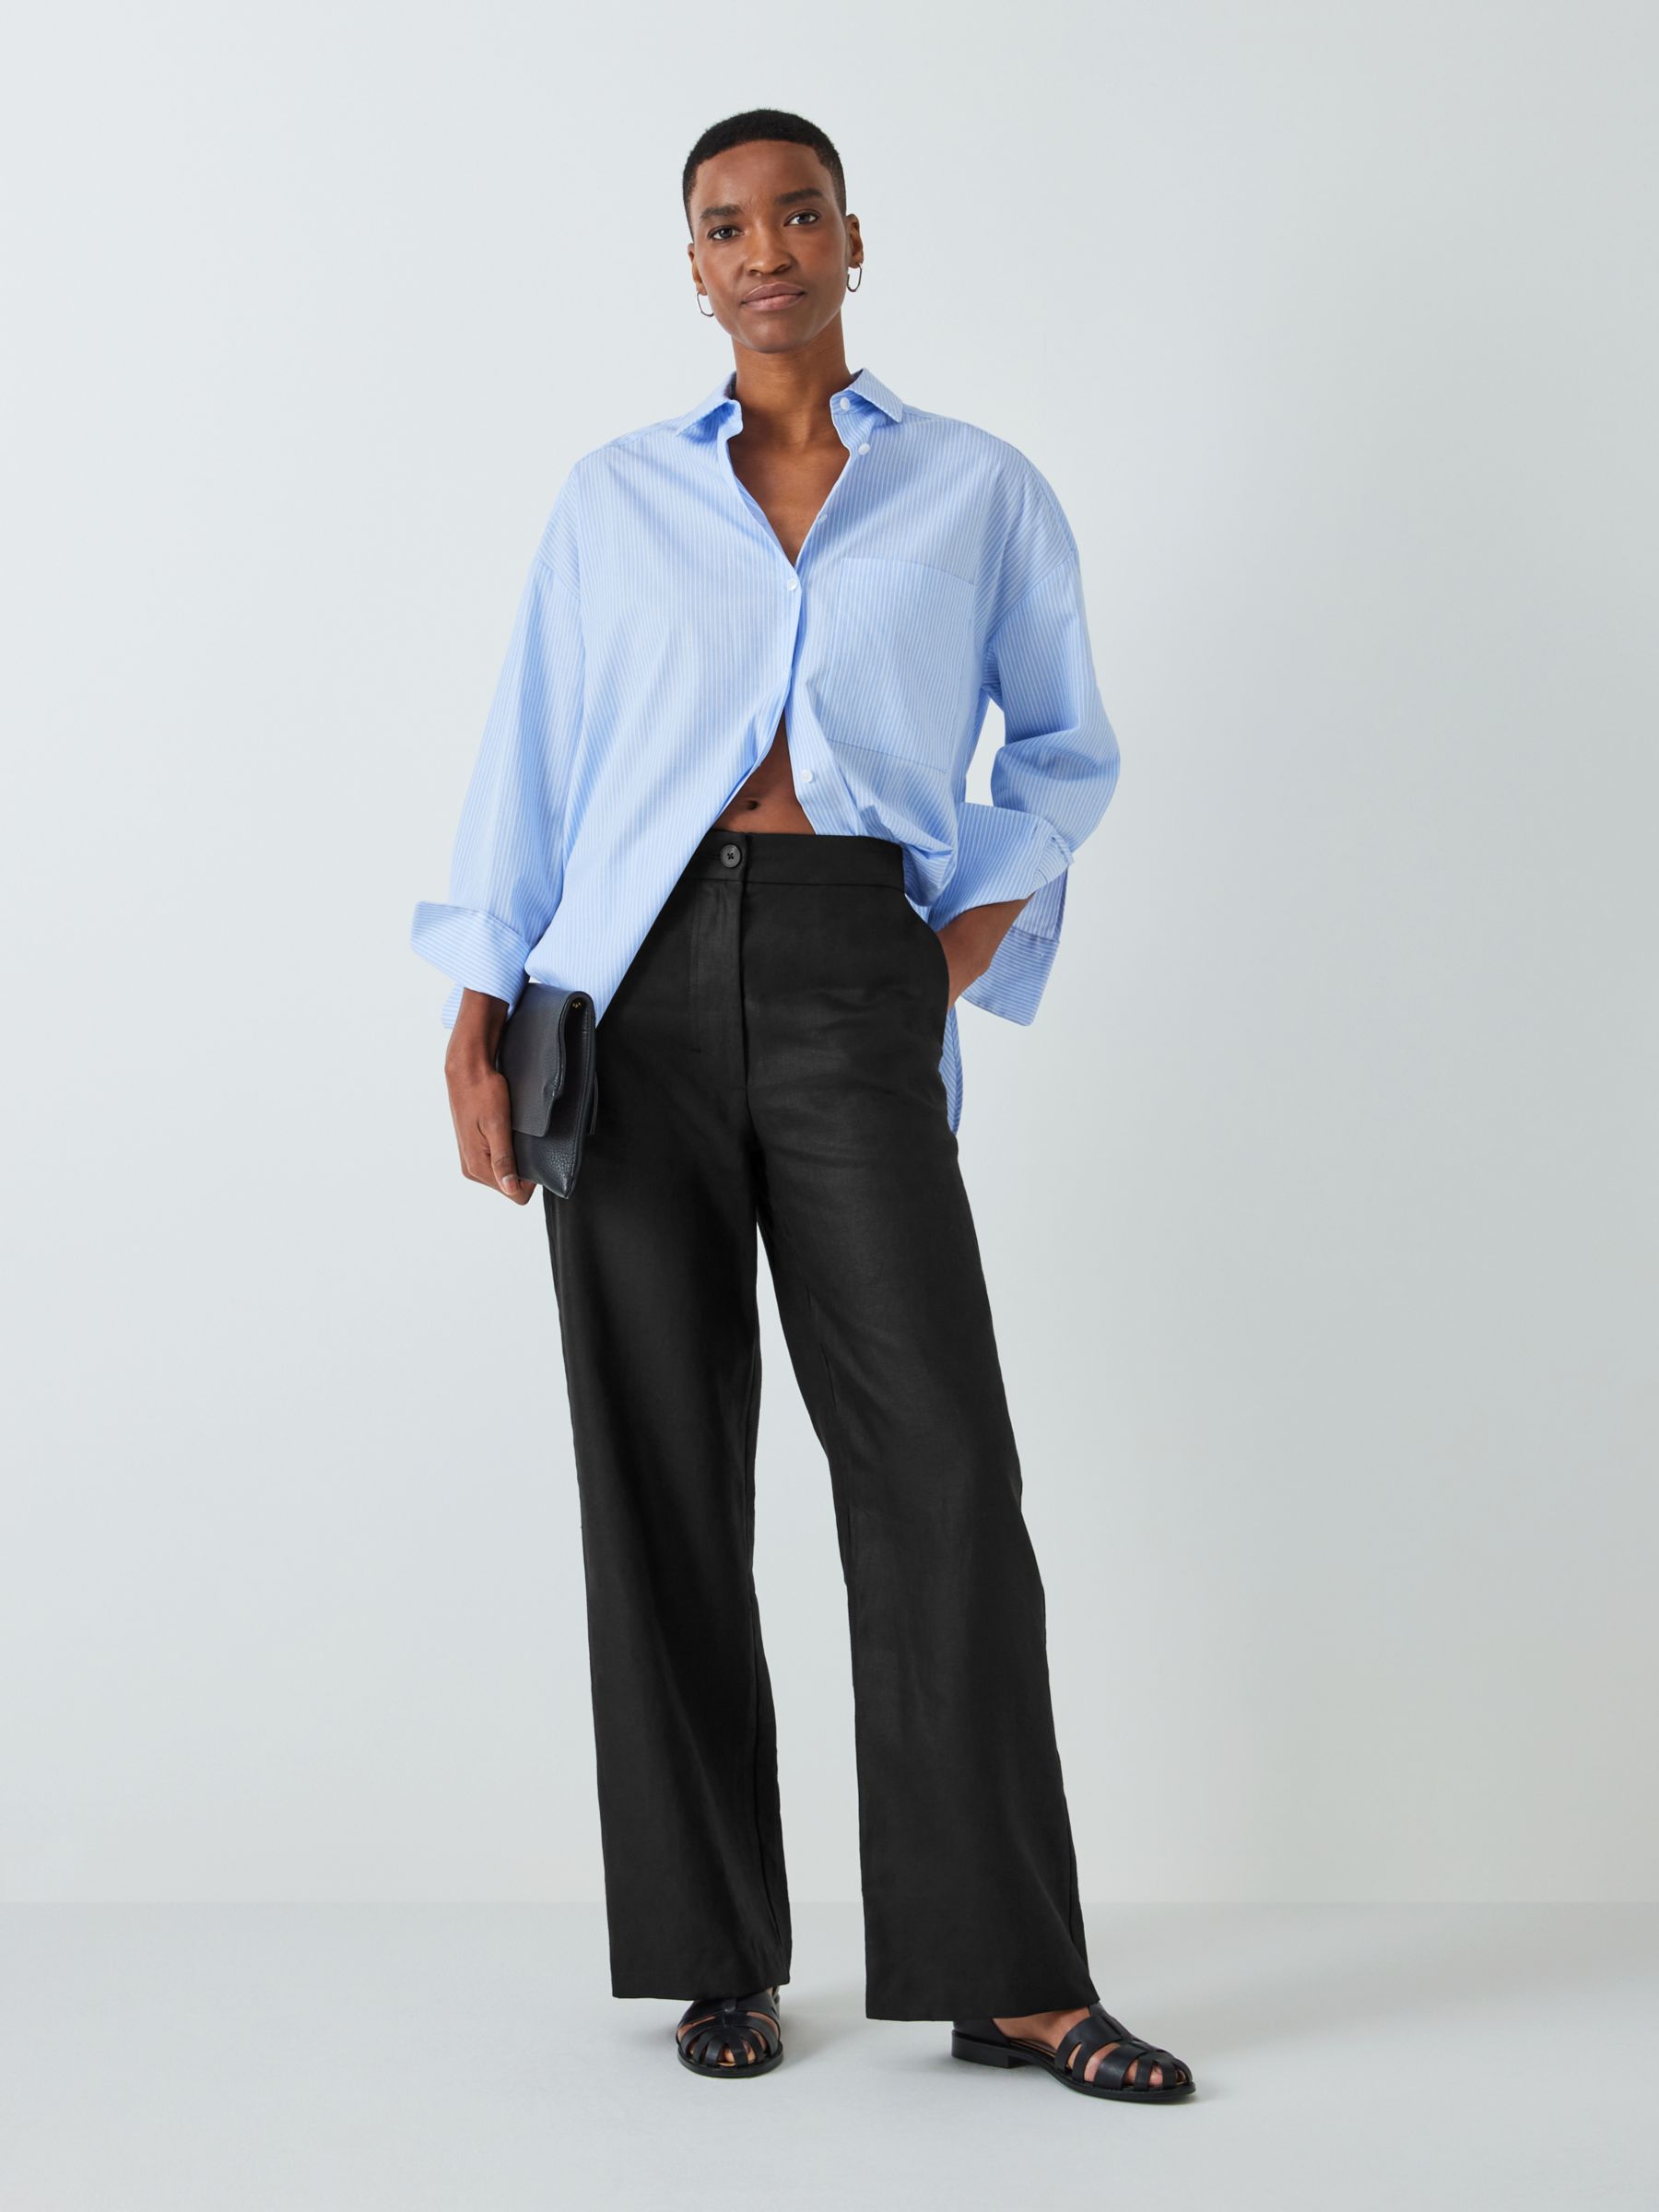 John Lewis Straight Fit Linen Trousers, Black at John Lewis & Partners